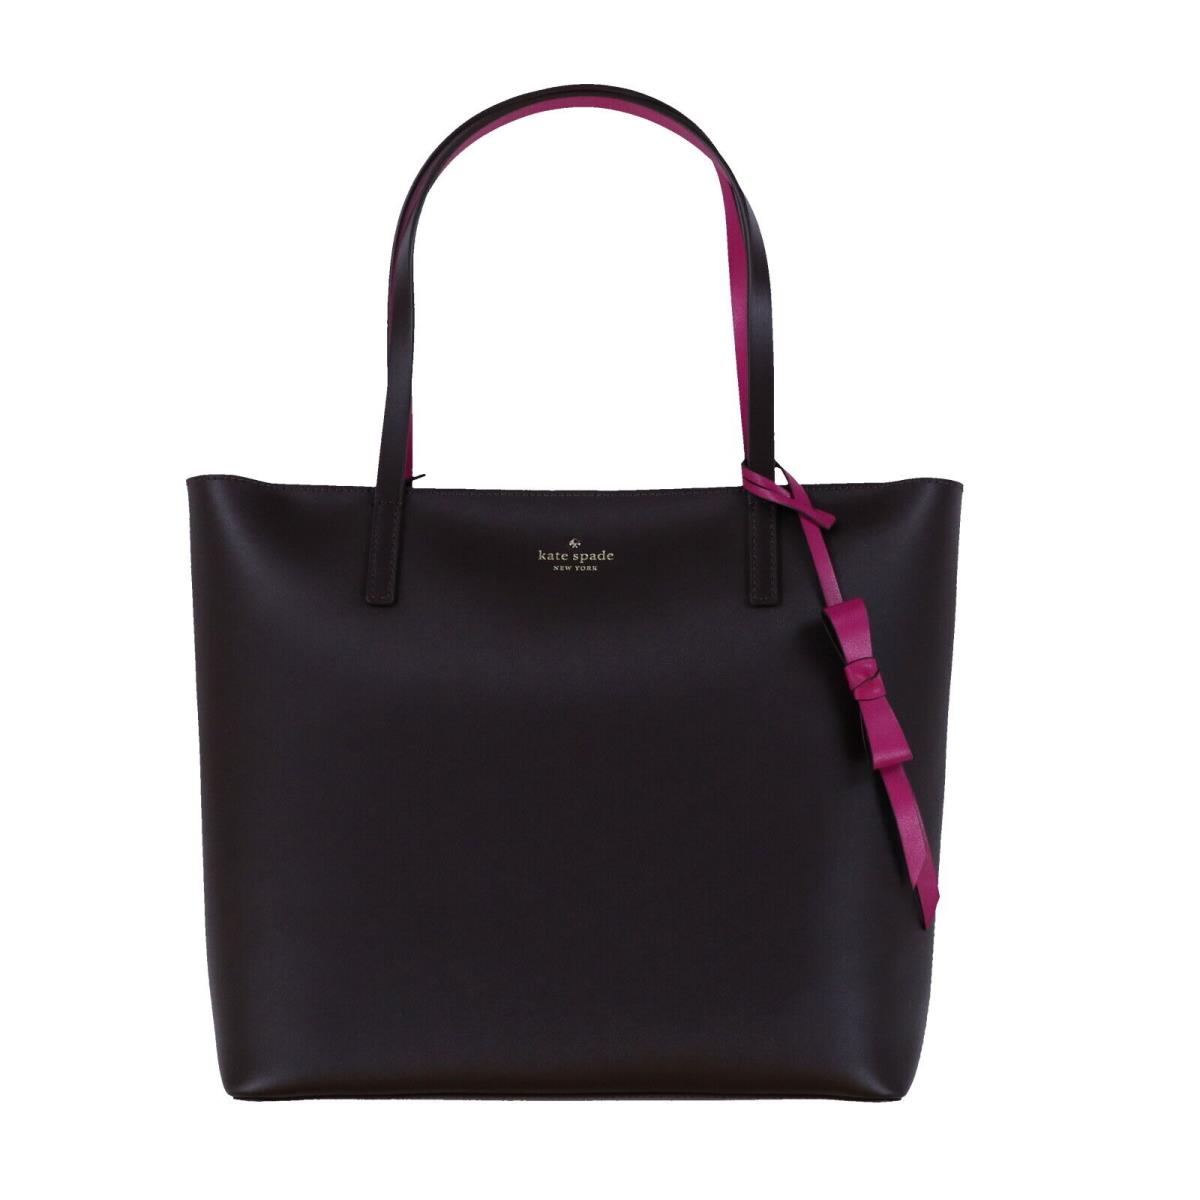 Kate Spade New York Lawton Way Rose Tote Large Purse Handbag Leather Bag New Chocolate Cherry